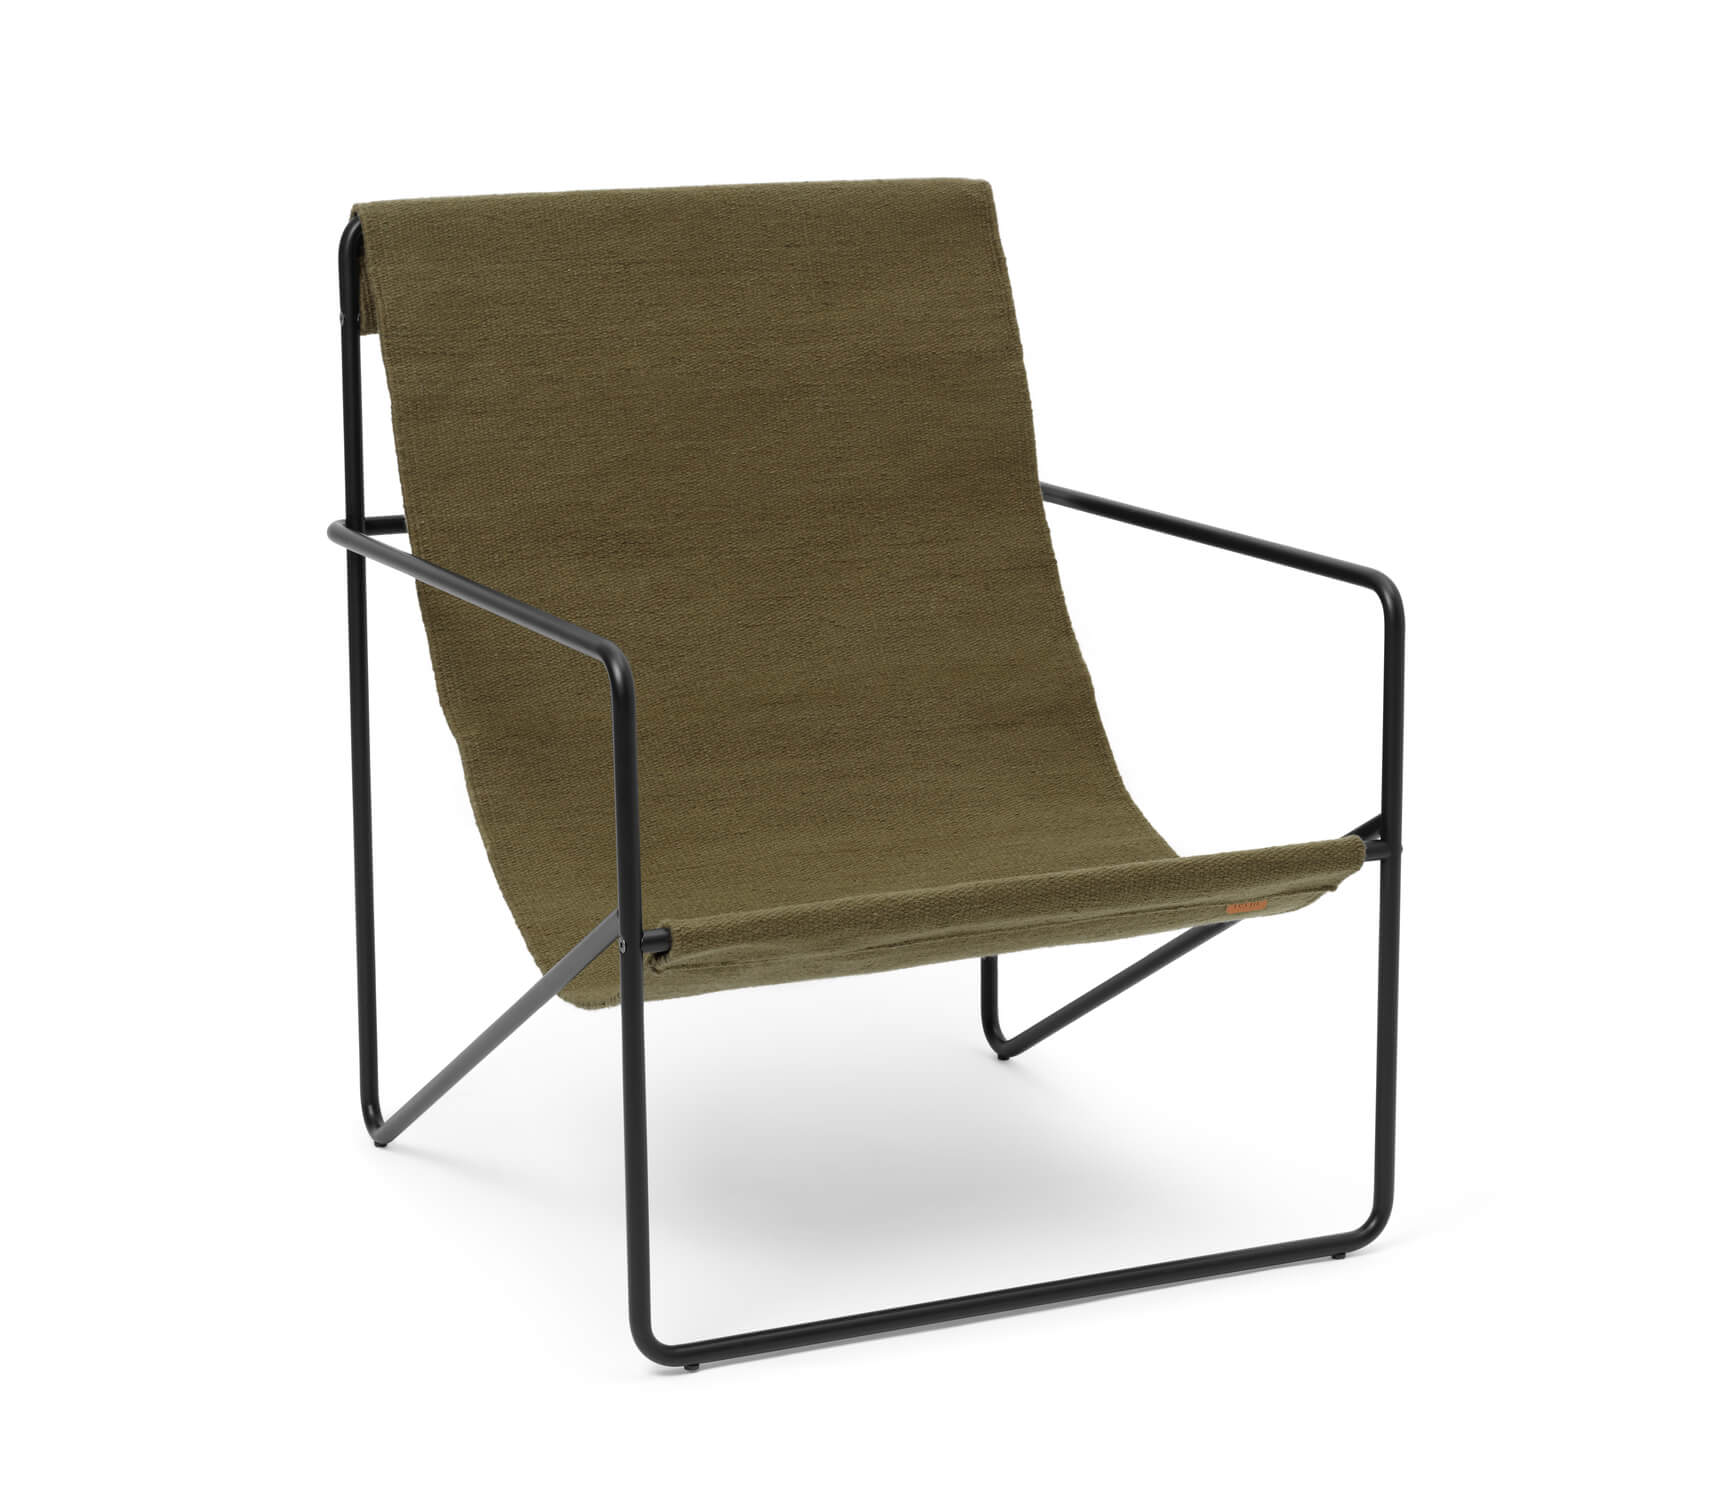 Desert Lounge Chair | Black Frame + Olive Fabric | by ferm Living - Lifestory - ferm Living